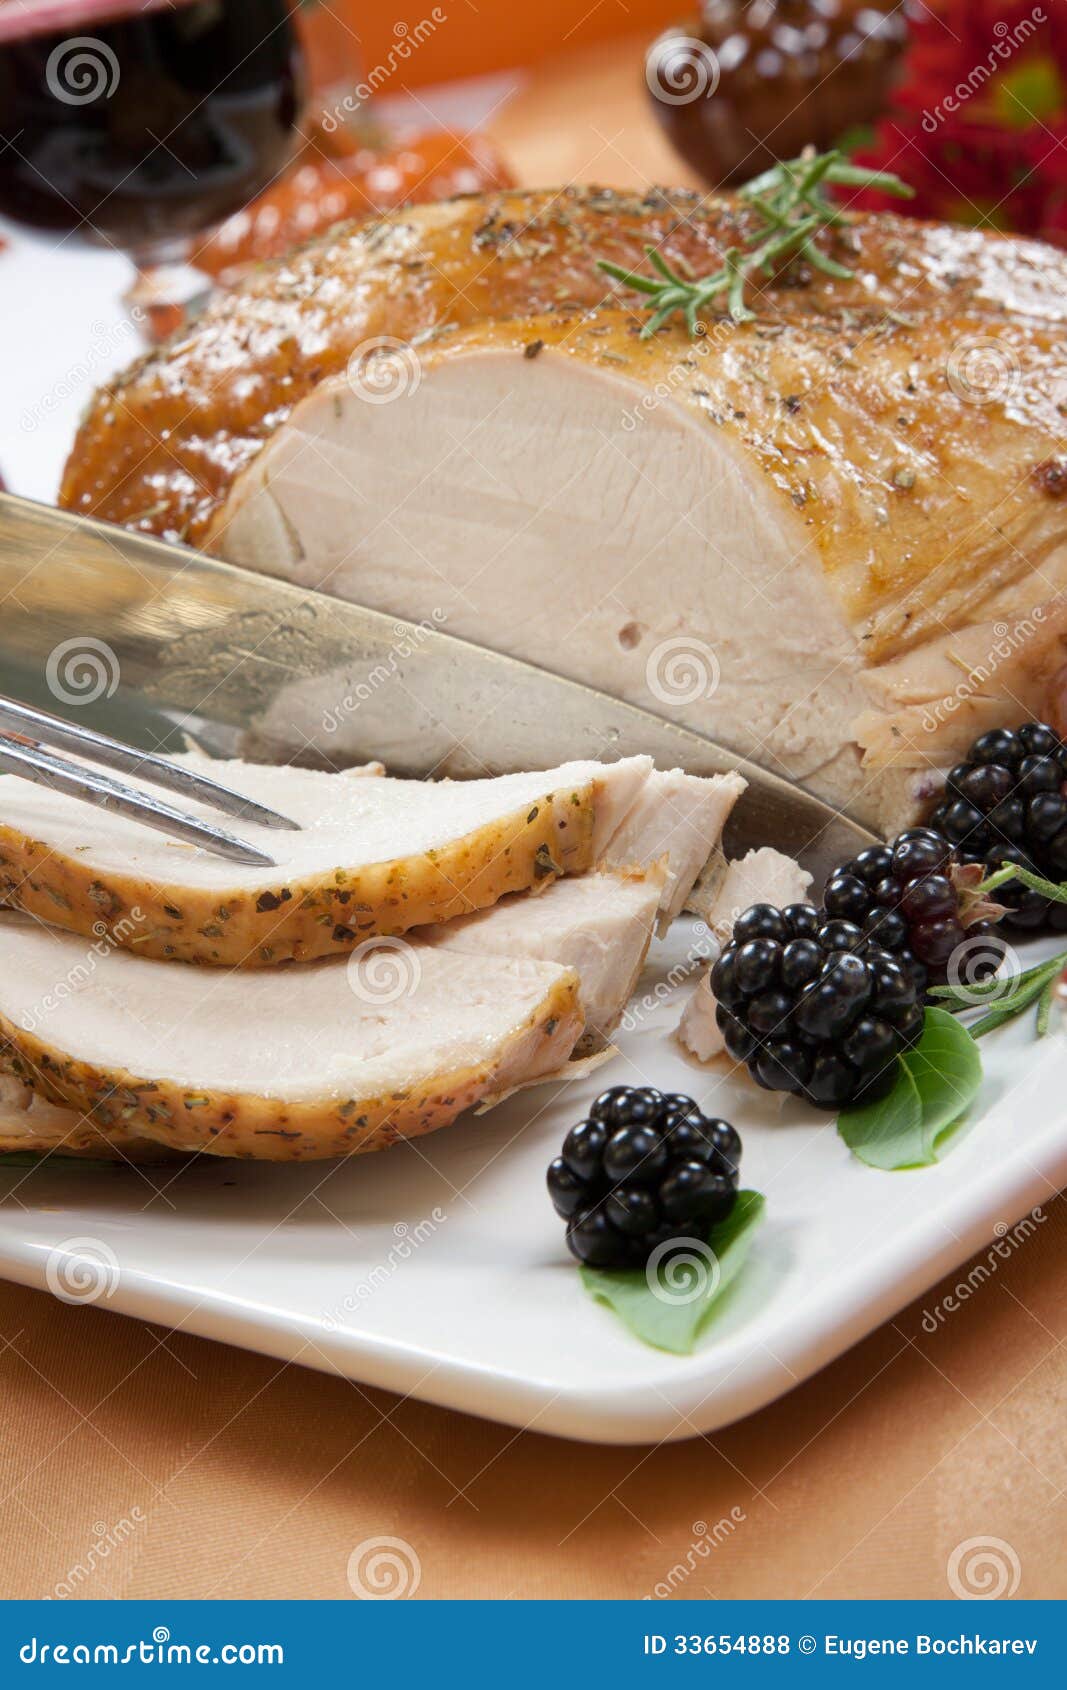 roasted turkey breast - rosemary-basil rub